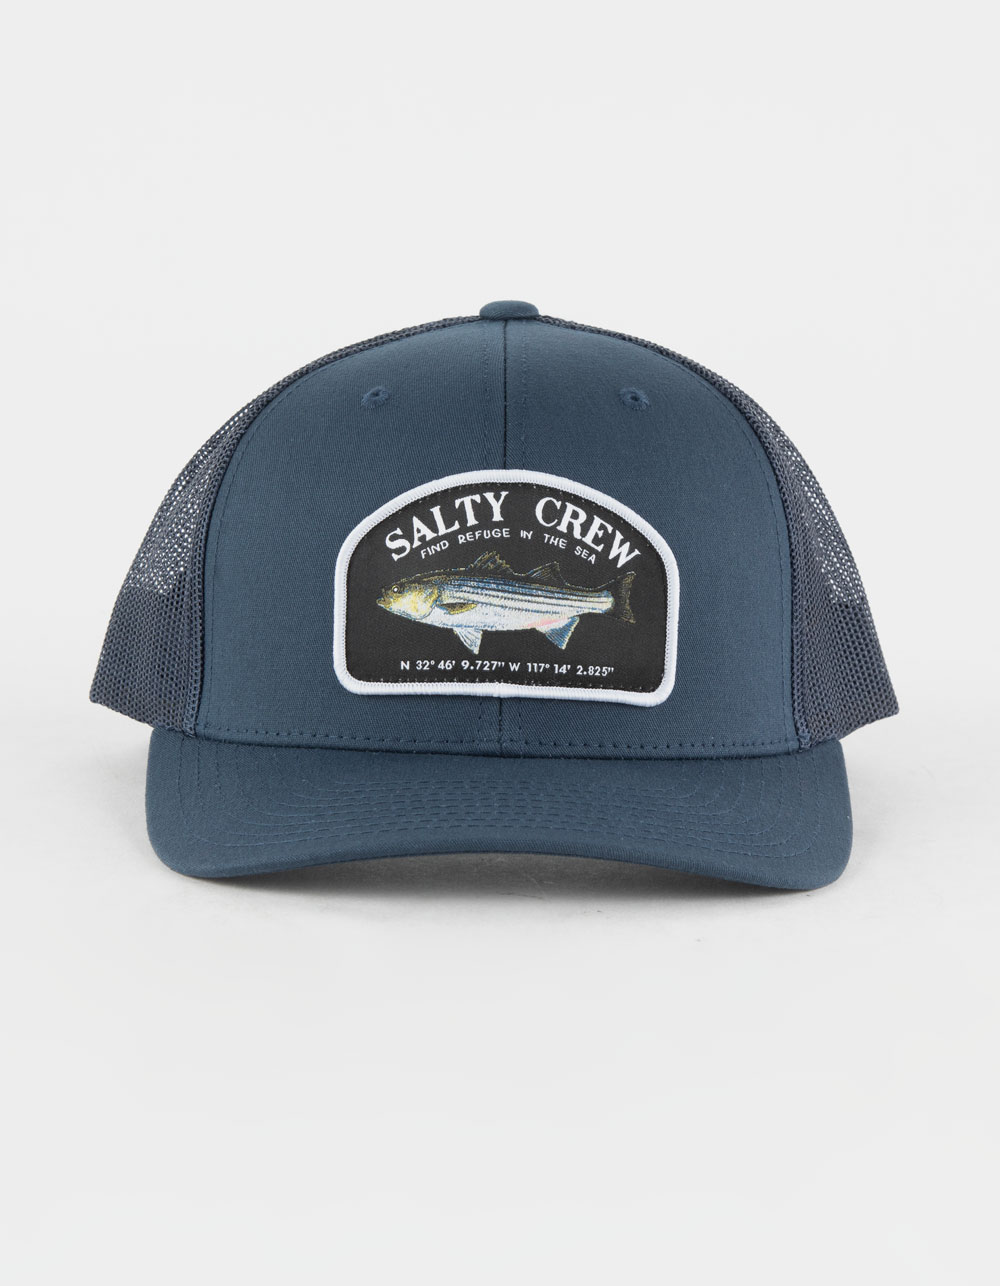 Salty Crew Striper Retro Trucker Hat - Navy